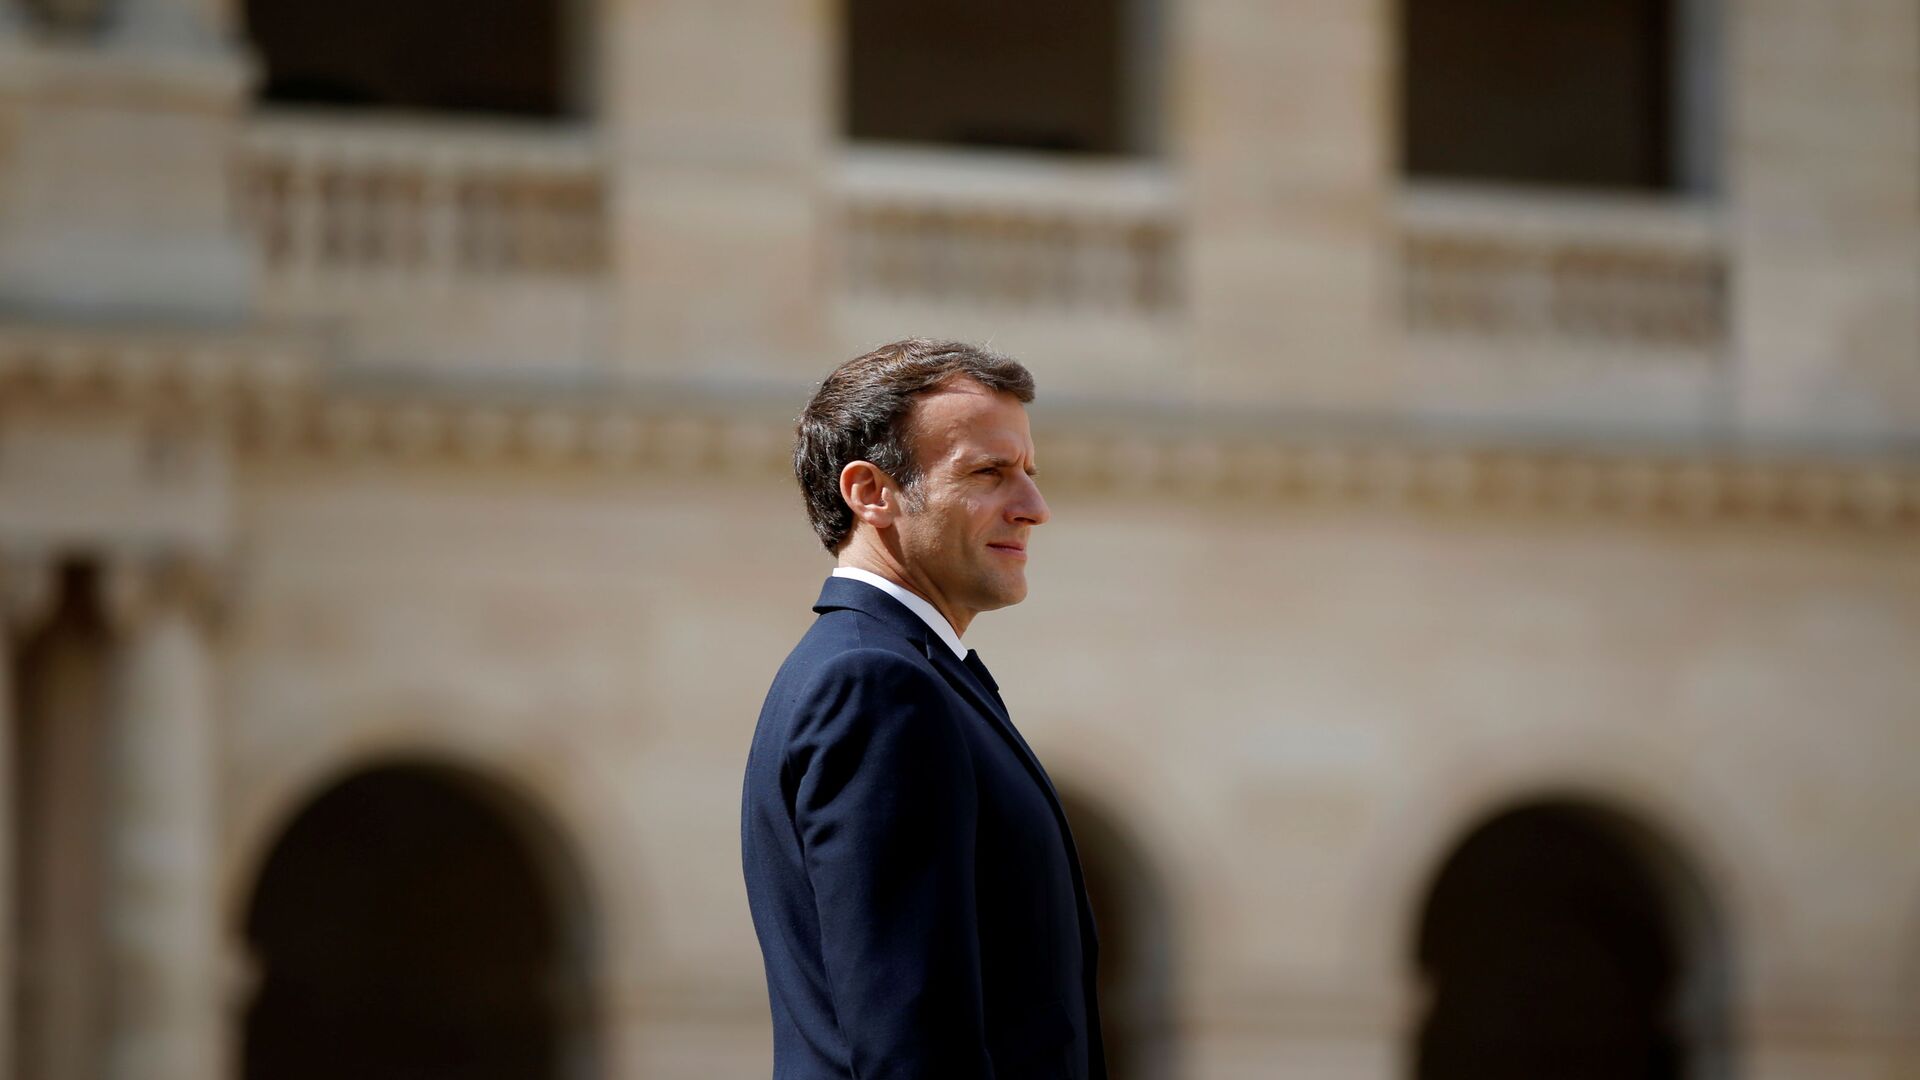 French President Emmanuel Macron attends a prise d'armes military ceremony at the Invalides in Paris, France, July 8, 2021. REUTERS/Sarah Meyssonnier/Pool - Sputnik International, 1920, 22.07.2021